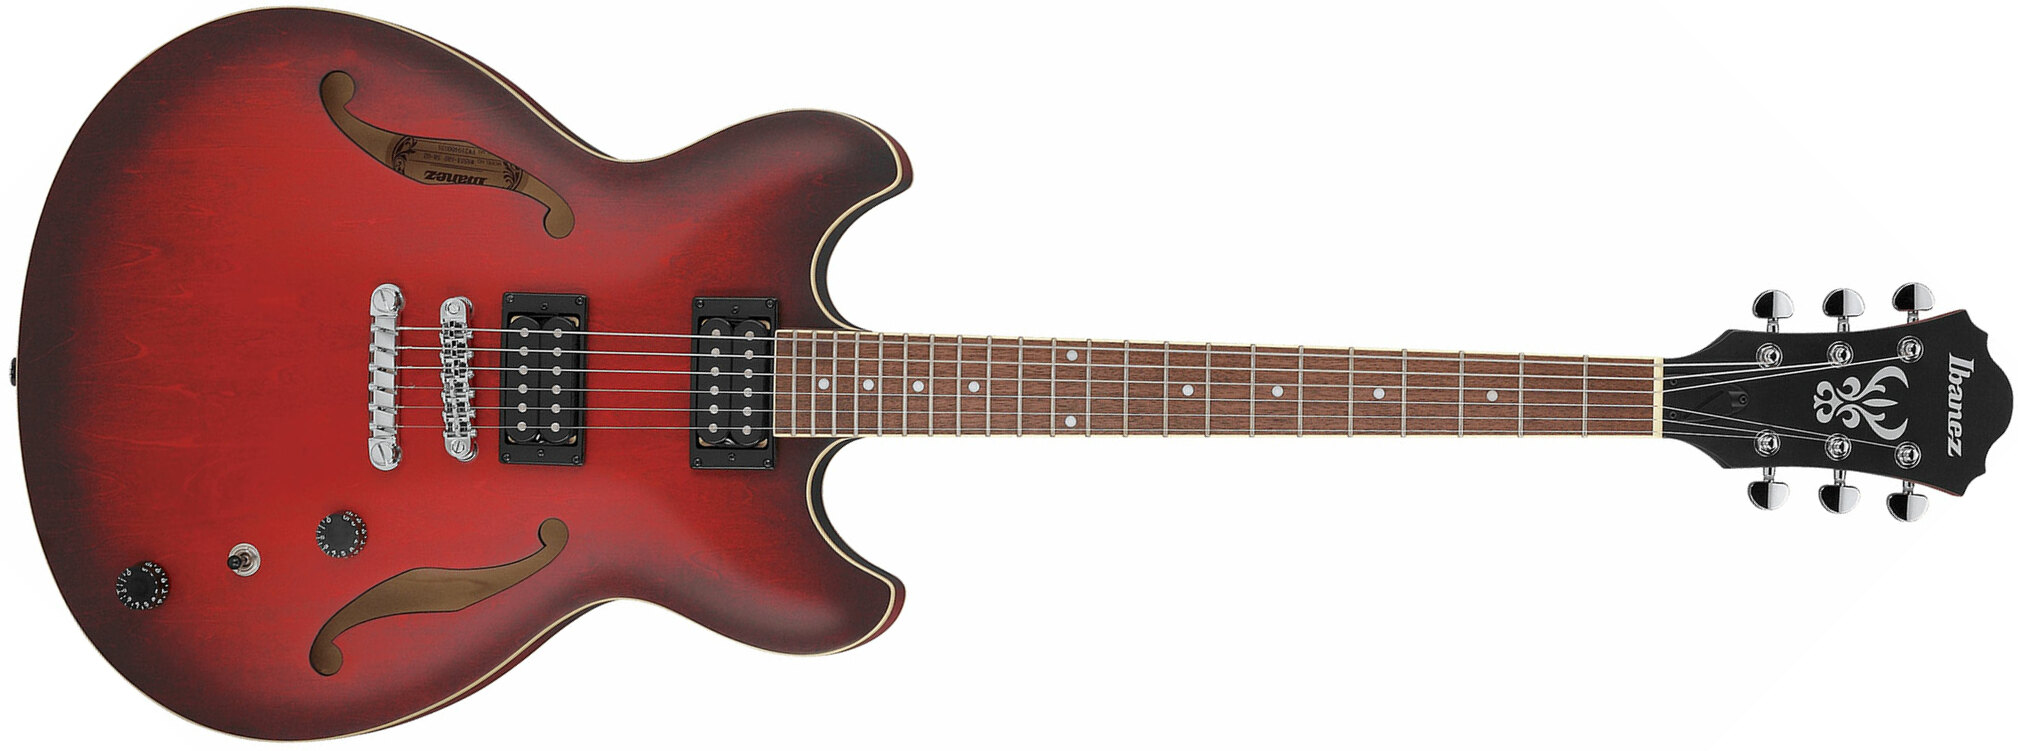 Ibanez As53 Srf Artcore Hh Ht Noy - Sunburst Red Flat - Semi-Hollow E-Gitarre - Main picture